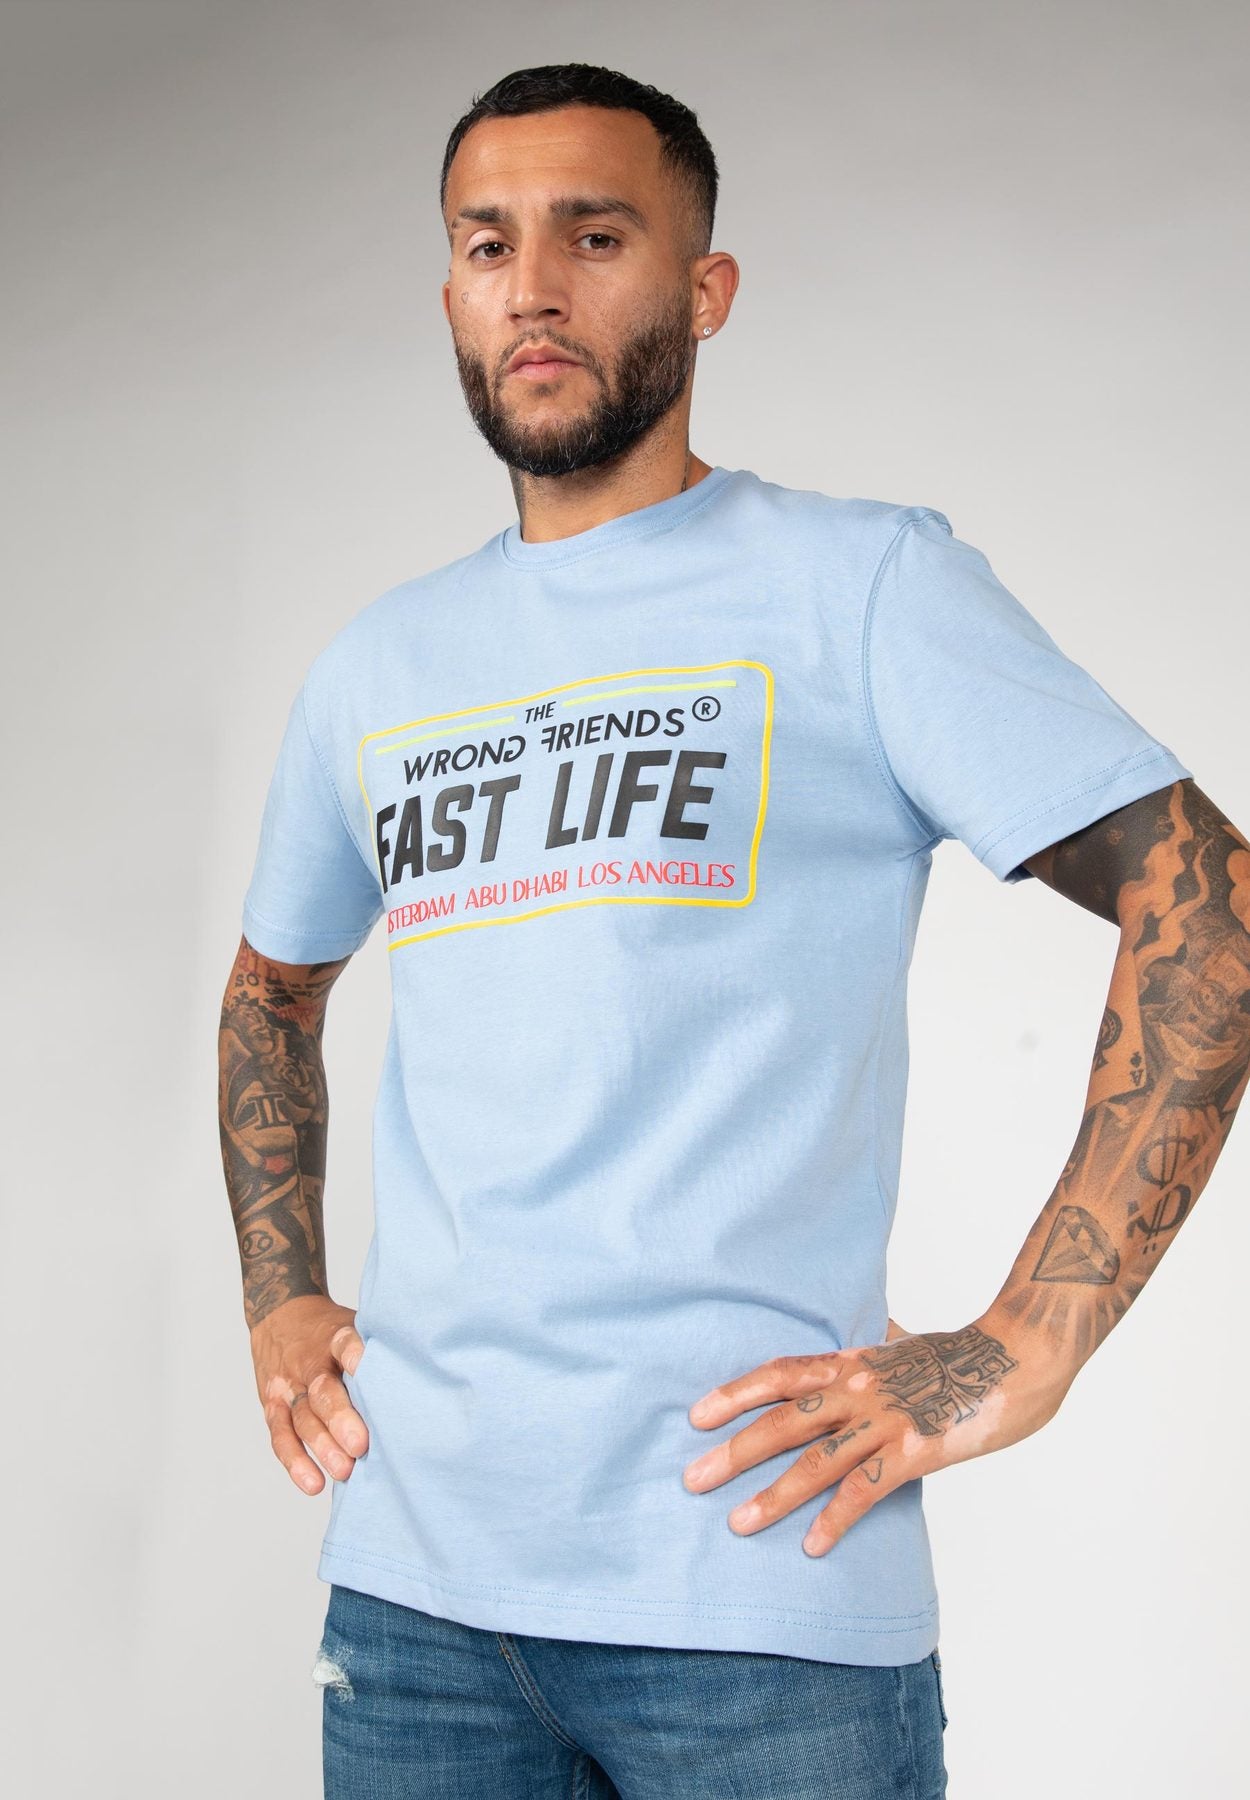 Fast Life T-shirt Blue